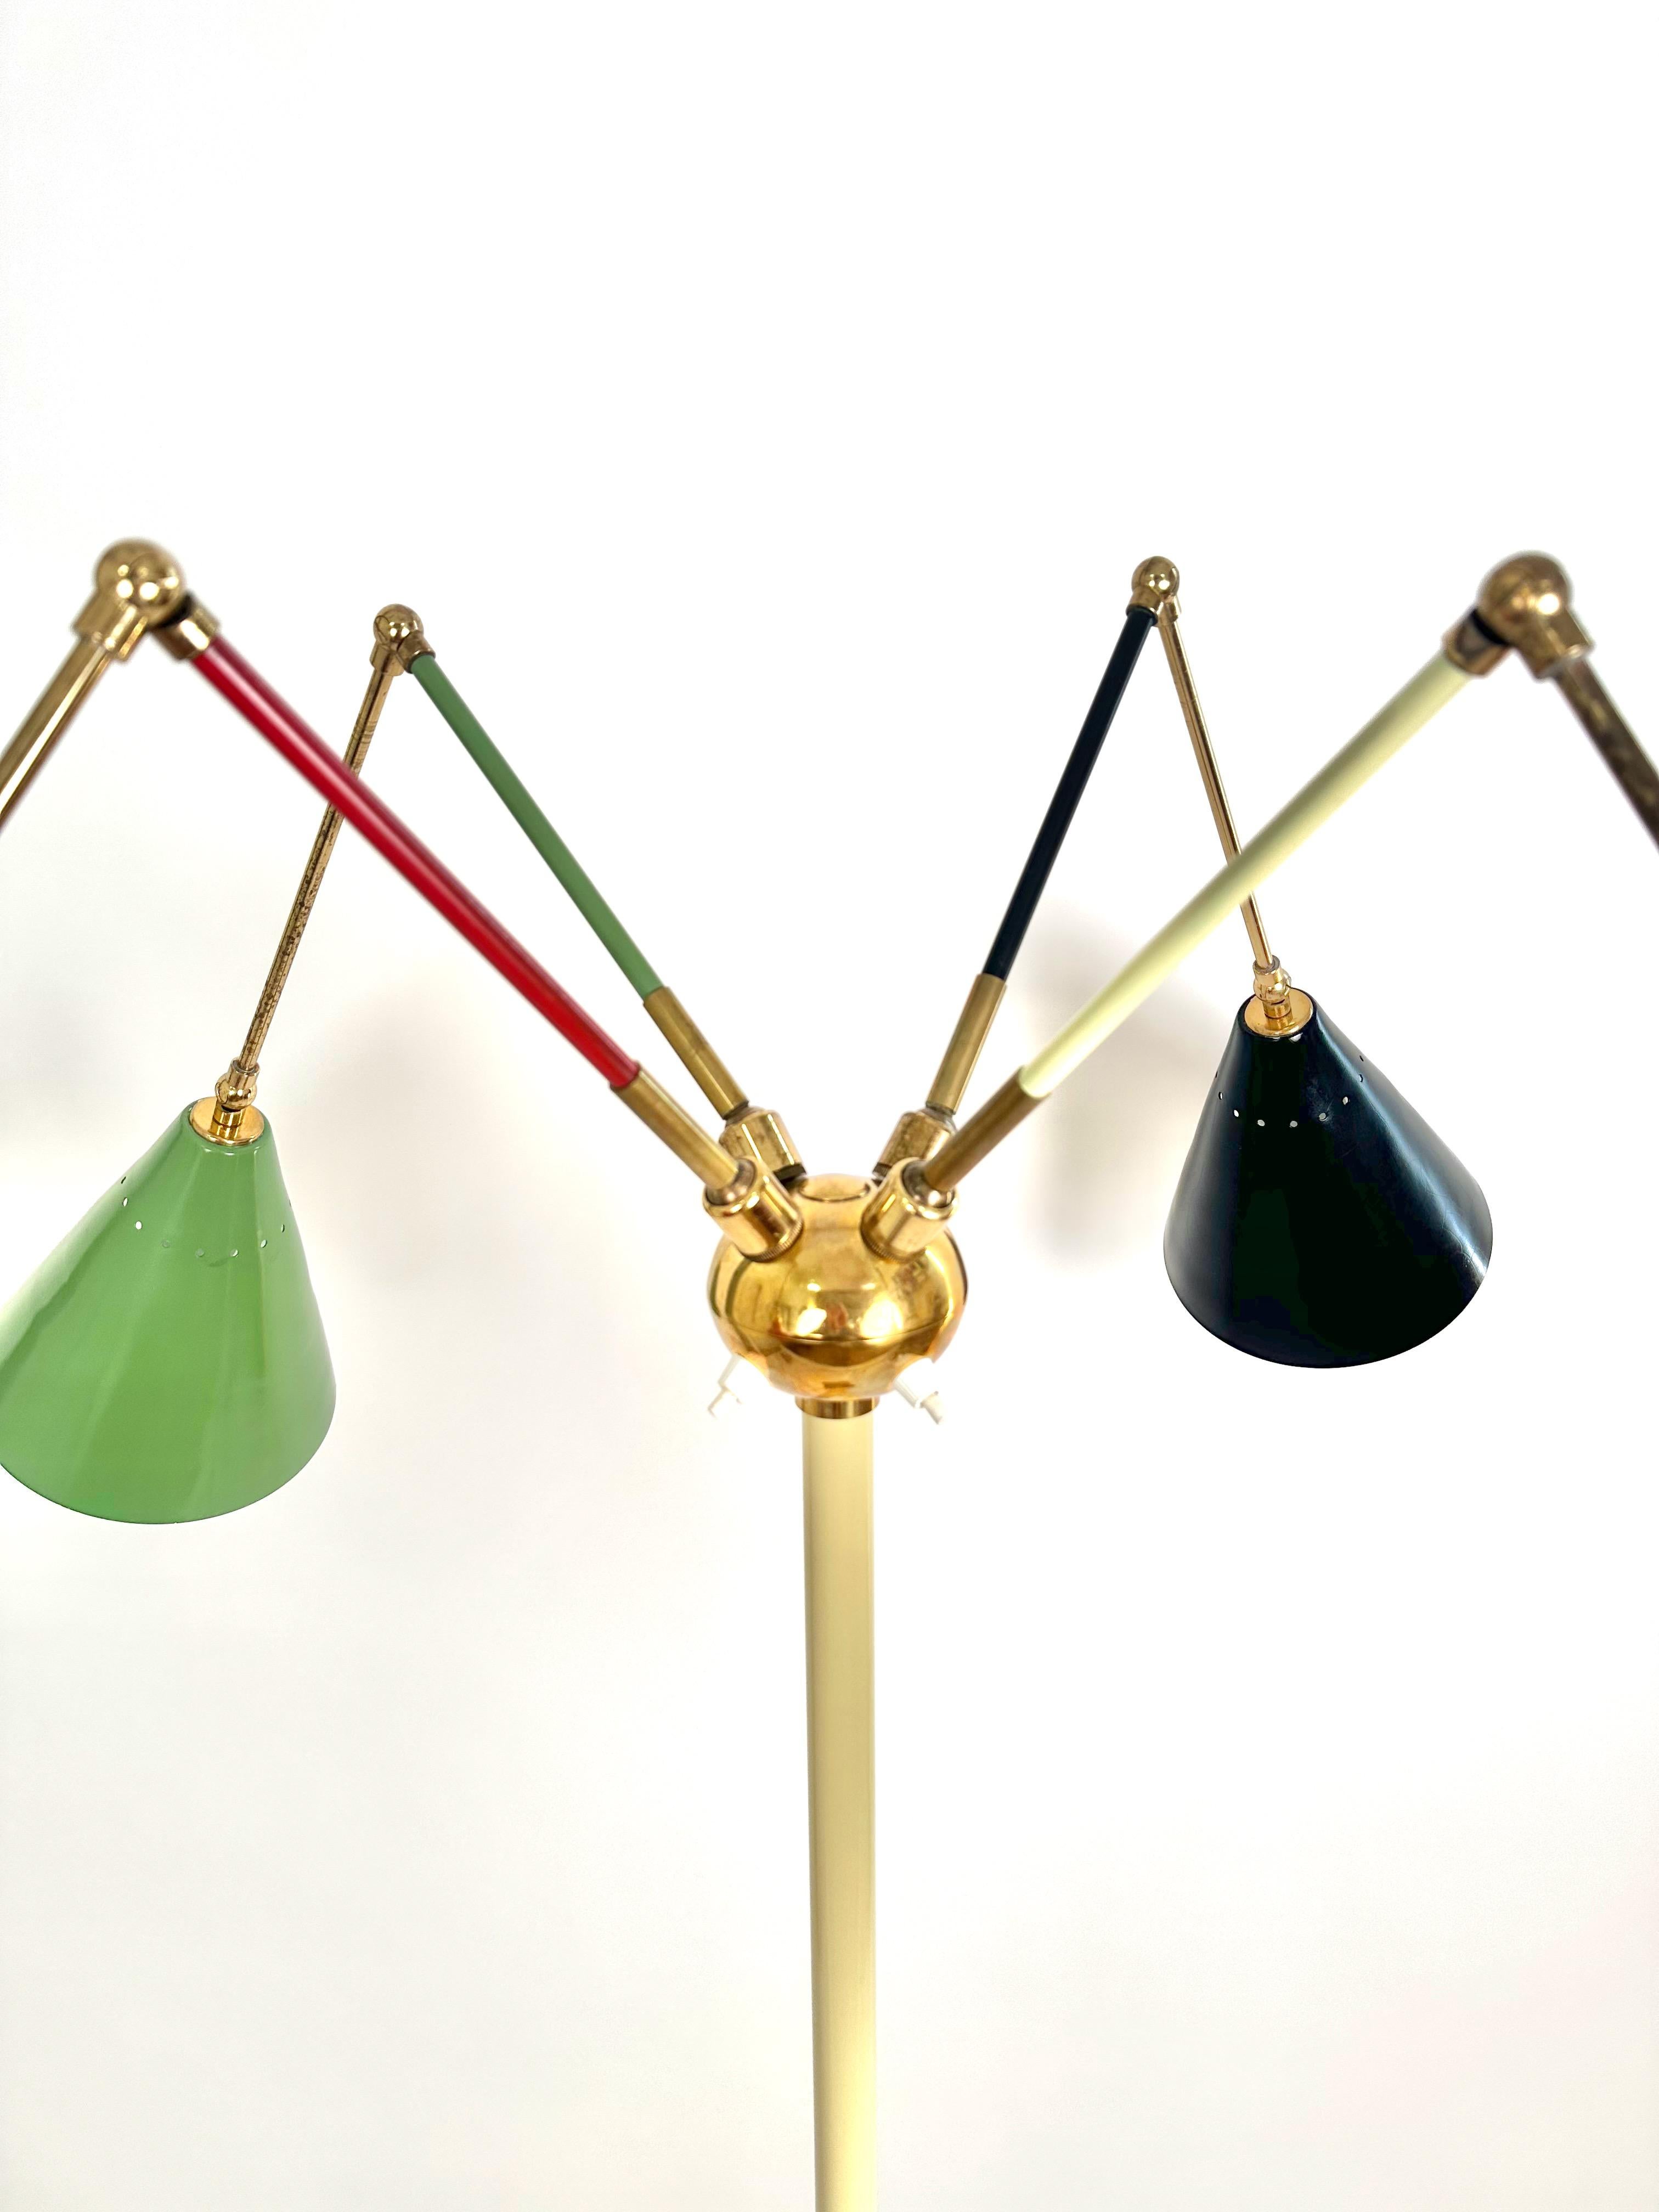 Angelo Lely Style Midcentury Italian Four Colour Shades Floor Lamp, 1950 For Sale 8